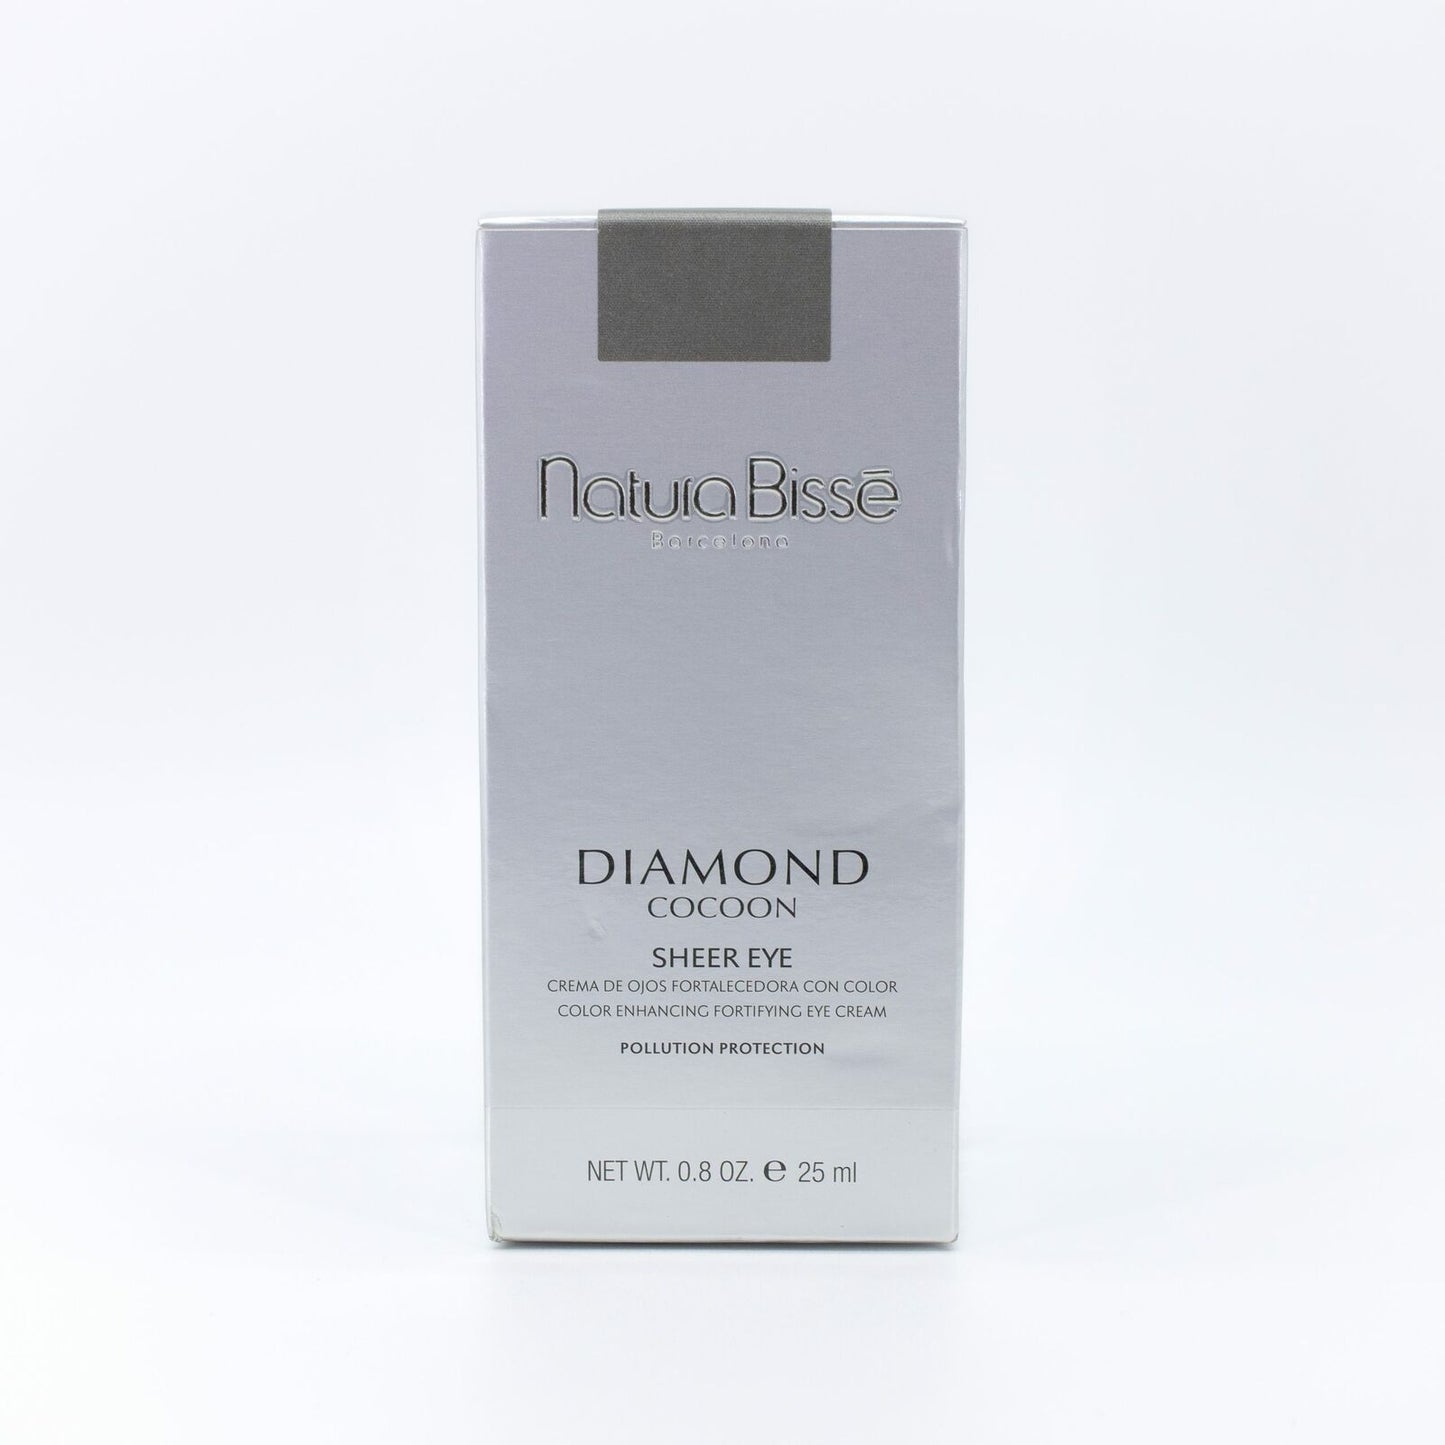 Natura Bisse Diamond Cocoon Sheer Eye 0.8oz - Imperfect Box